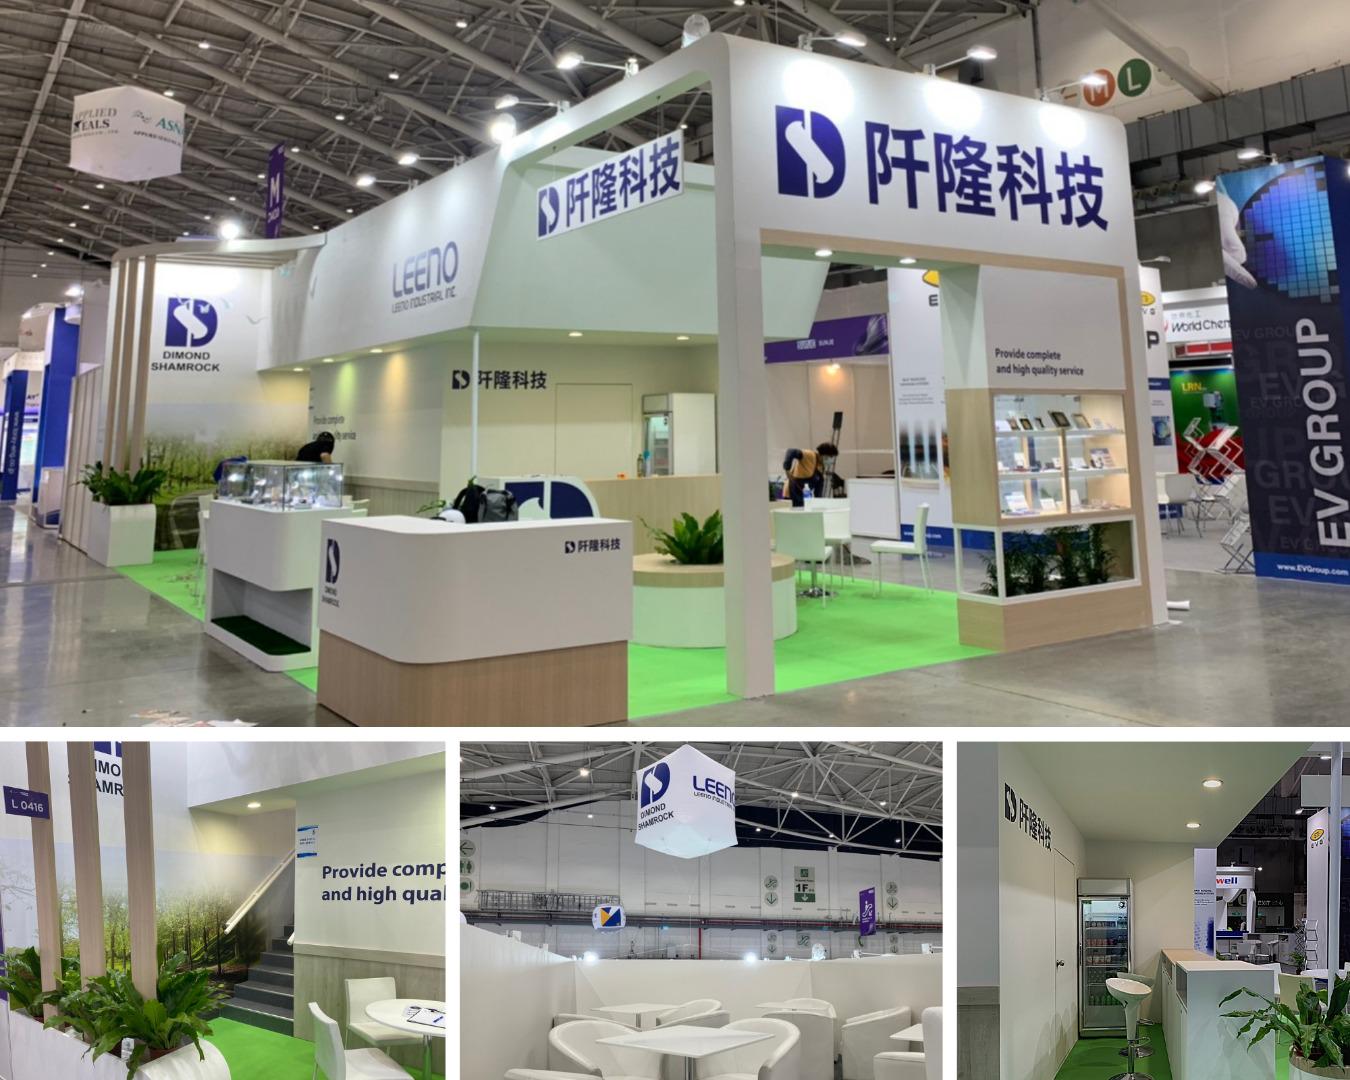 International Semiconductor Exhibition 2021, SEMICON2021, multi-storey booth, boothdesign, doubledeckbooth, DimondShamrock, booth design, Qianlong Technology, KingOneDesign